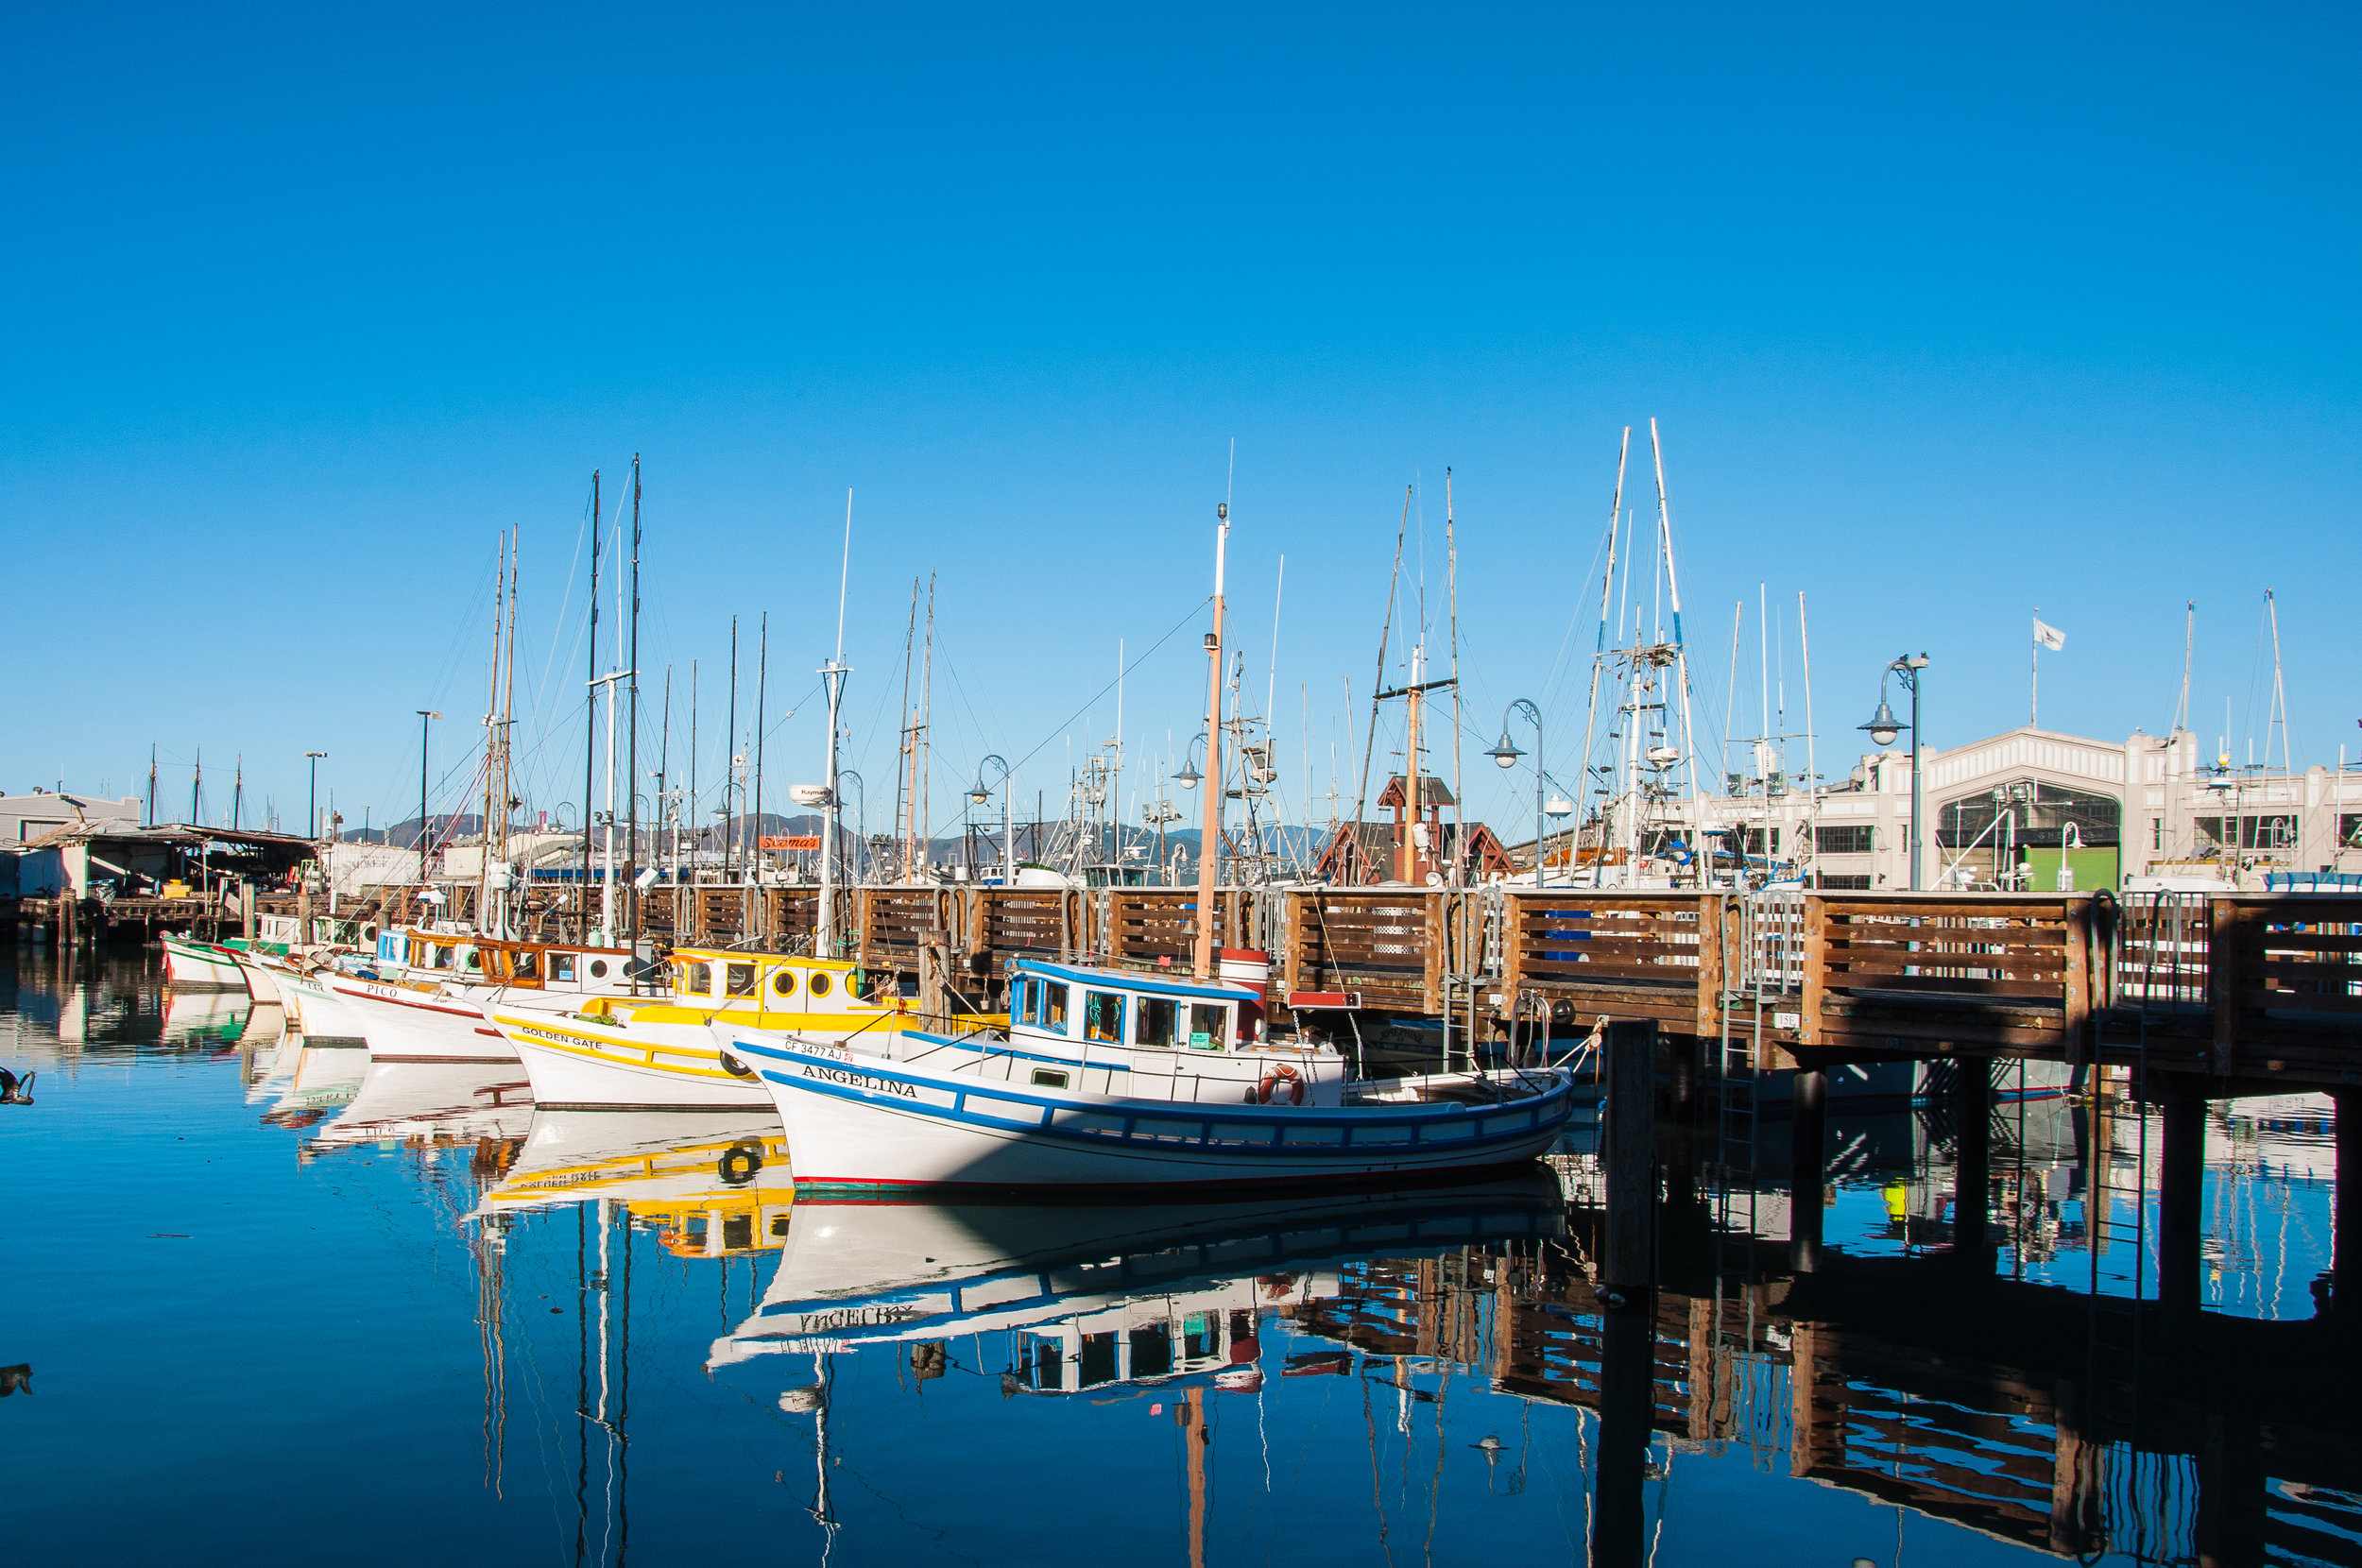  Fisherman’s Wharf - San Francisco CA 